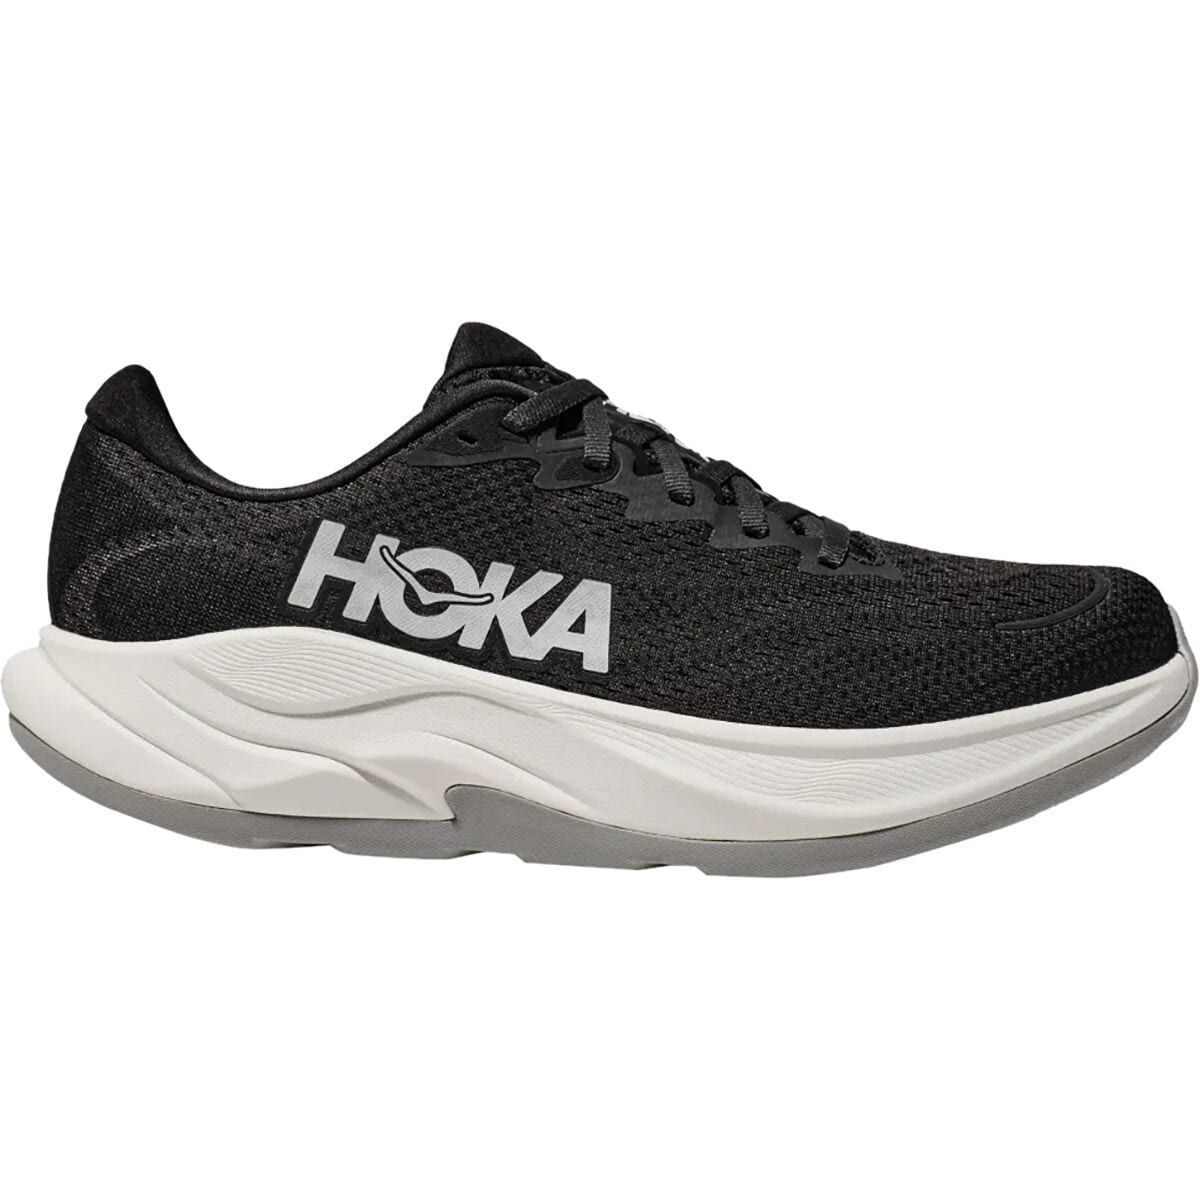 Rincon 4 Running Shoe Hoka